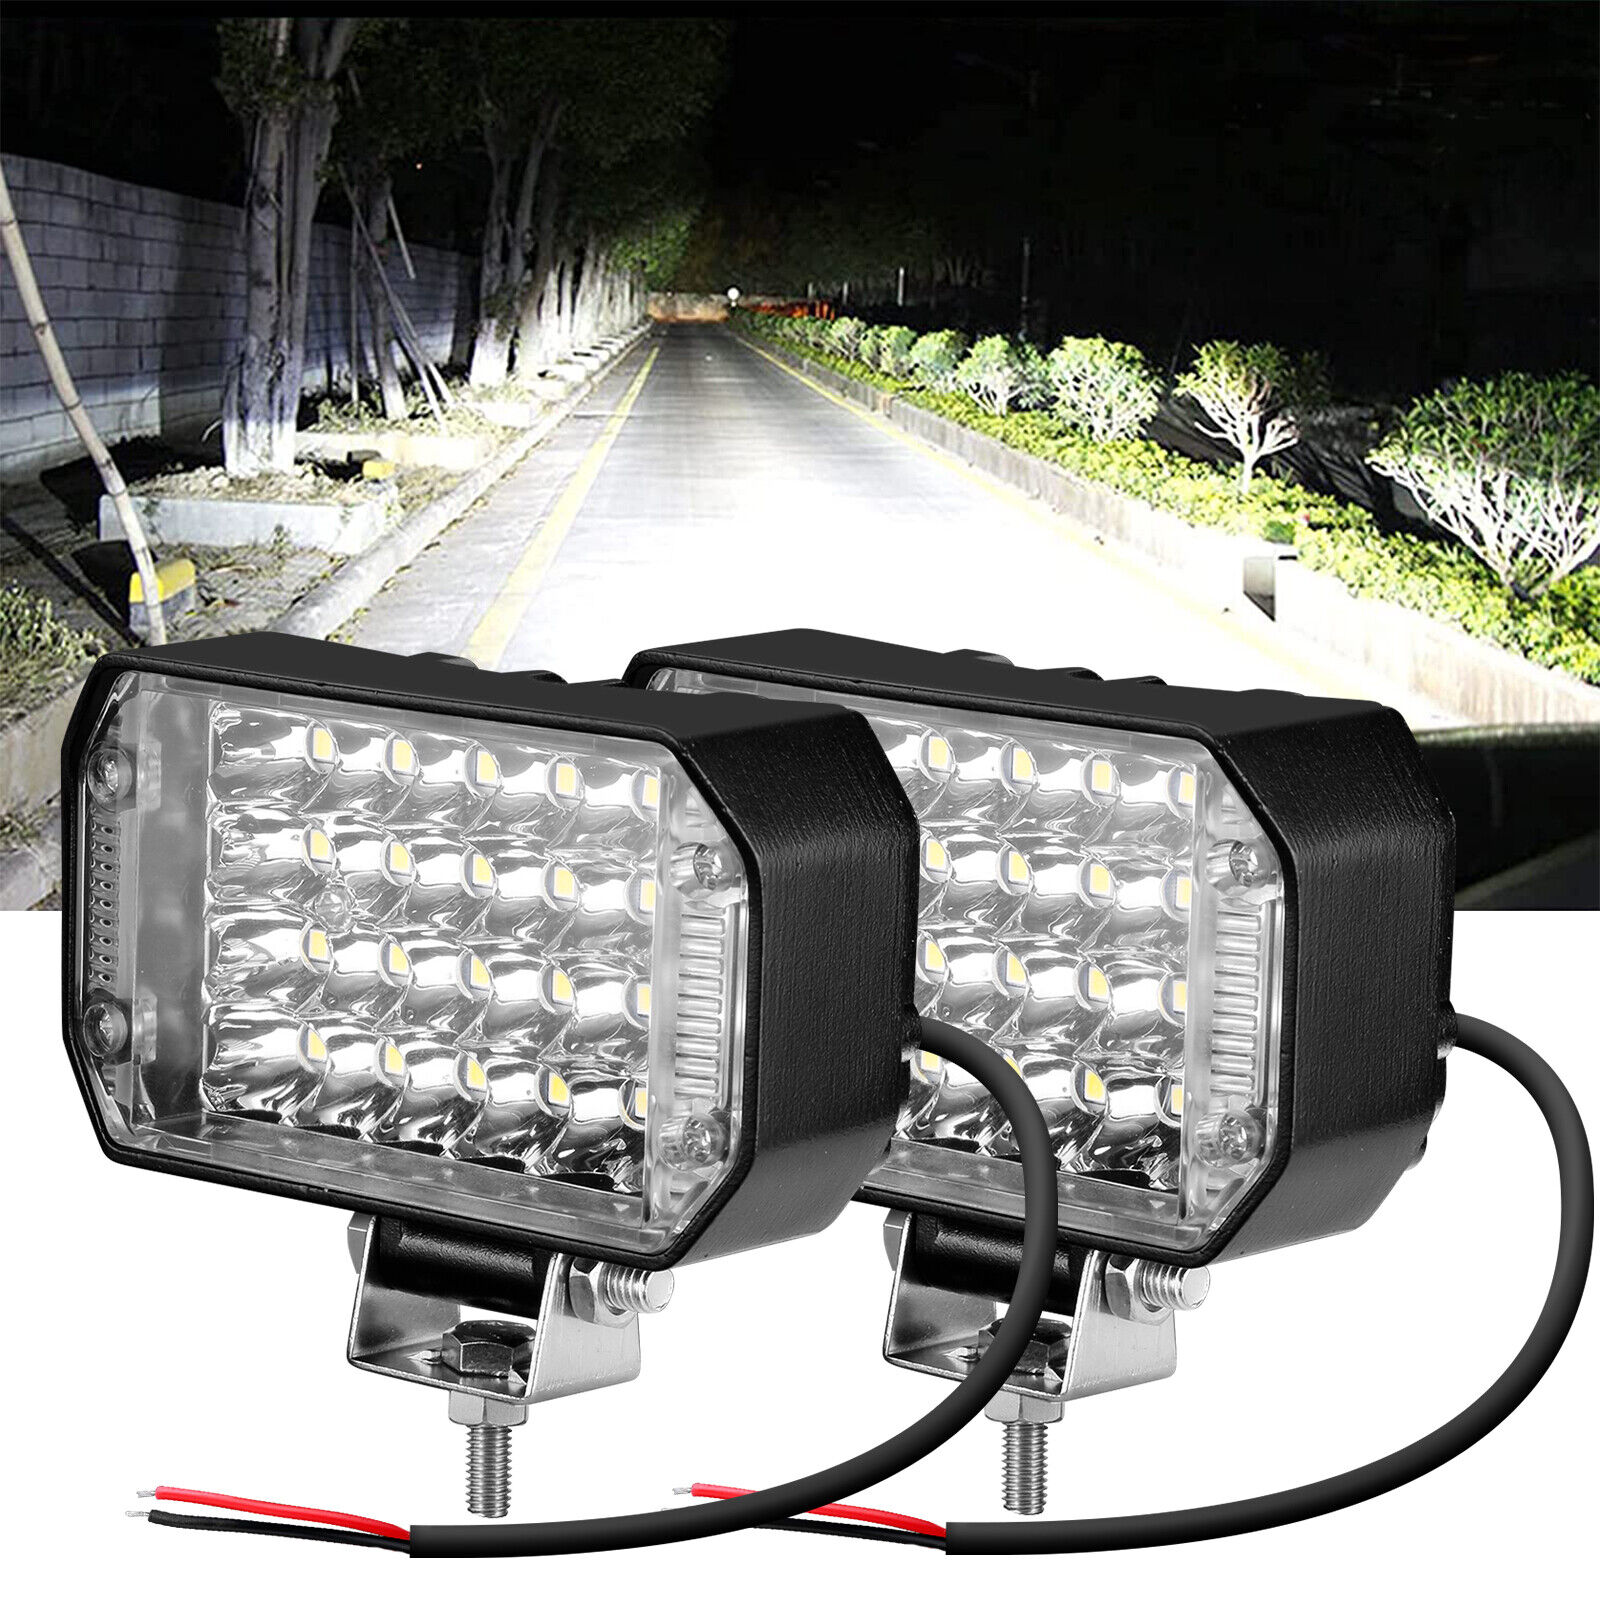 2/4x 4inch 800W LED Work Lights Bar Spot Pods Fog Lamp Offroad Driving Truck ATV